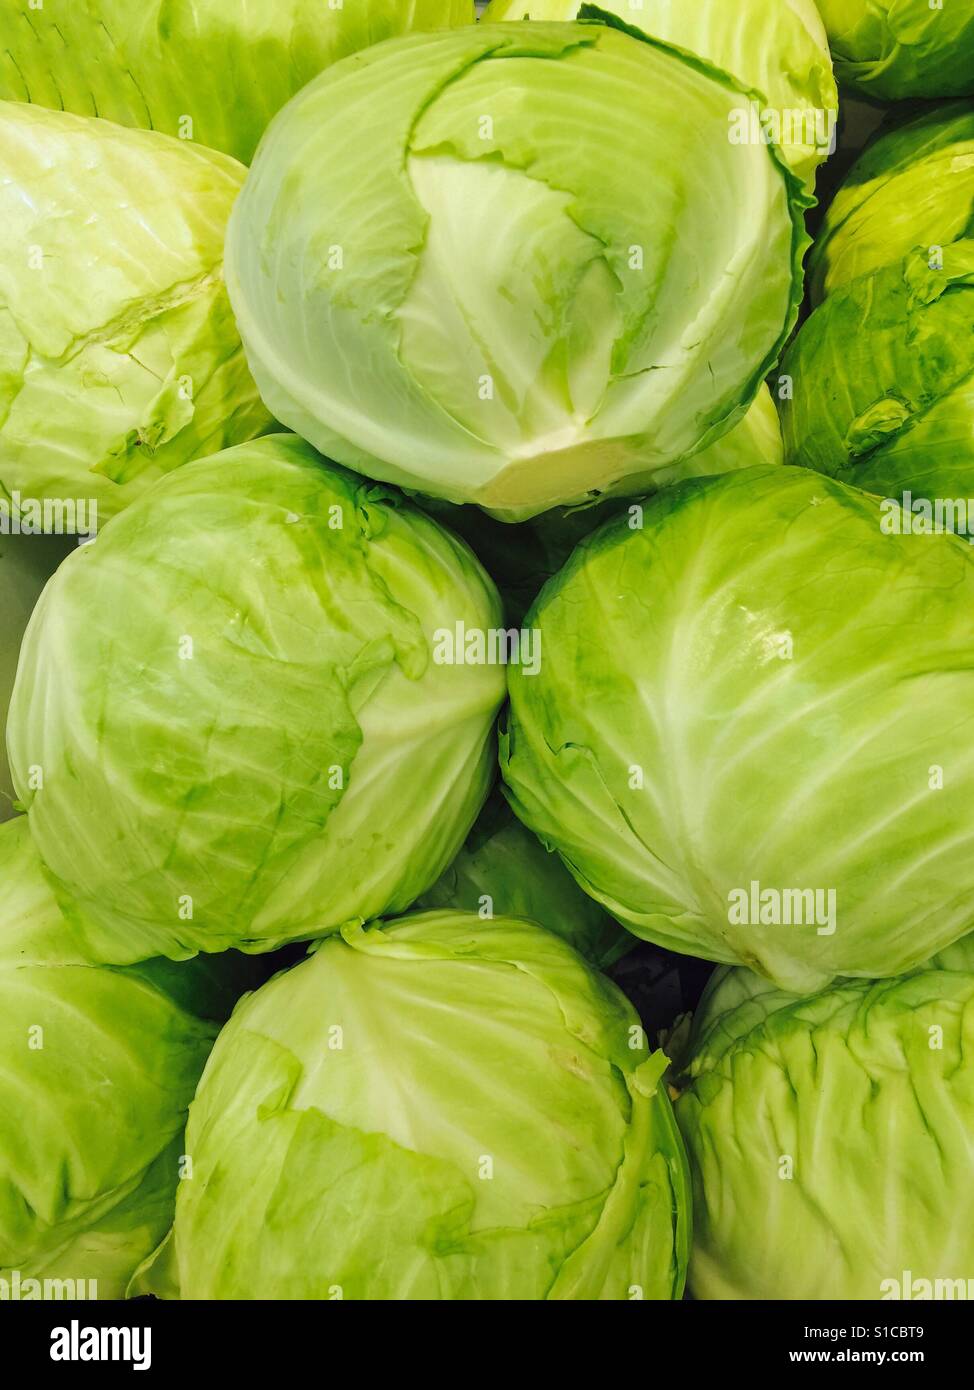 Green Cabbage at market Stock Photo